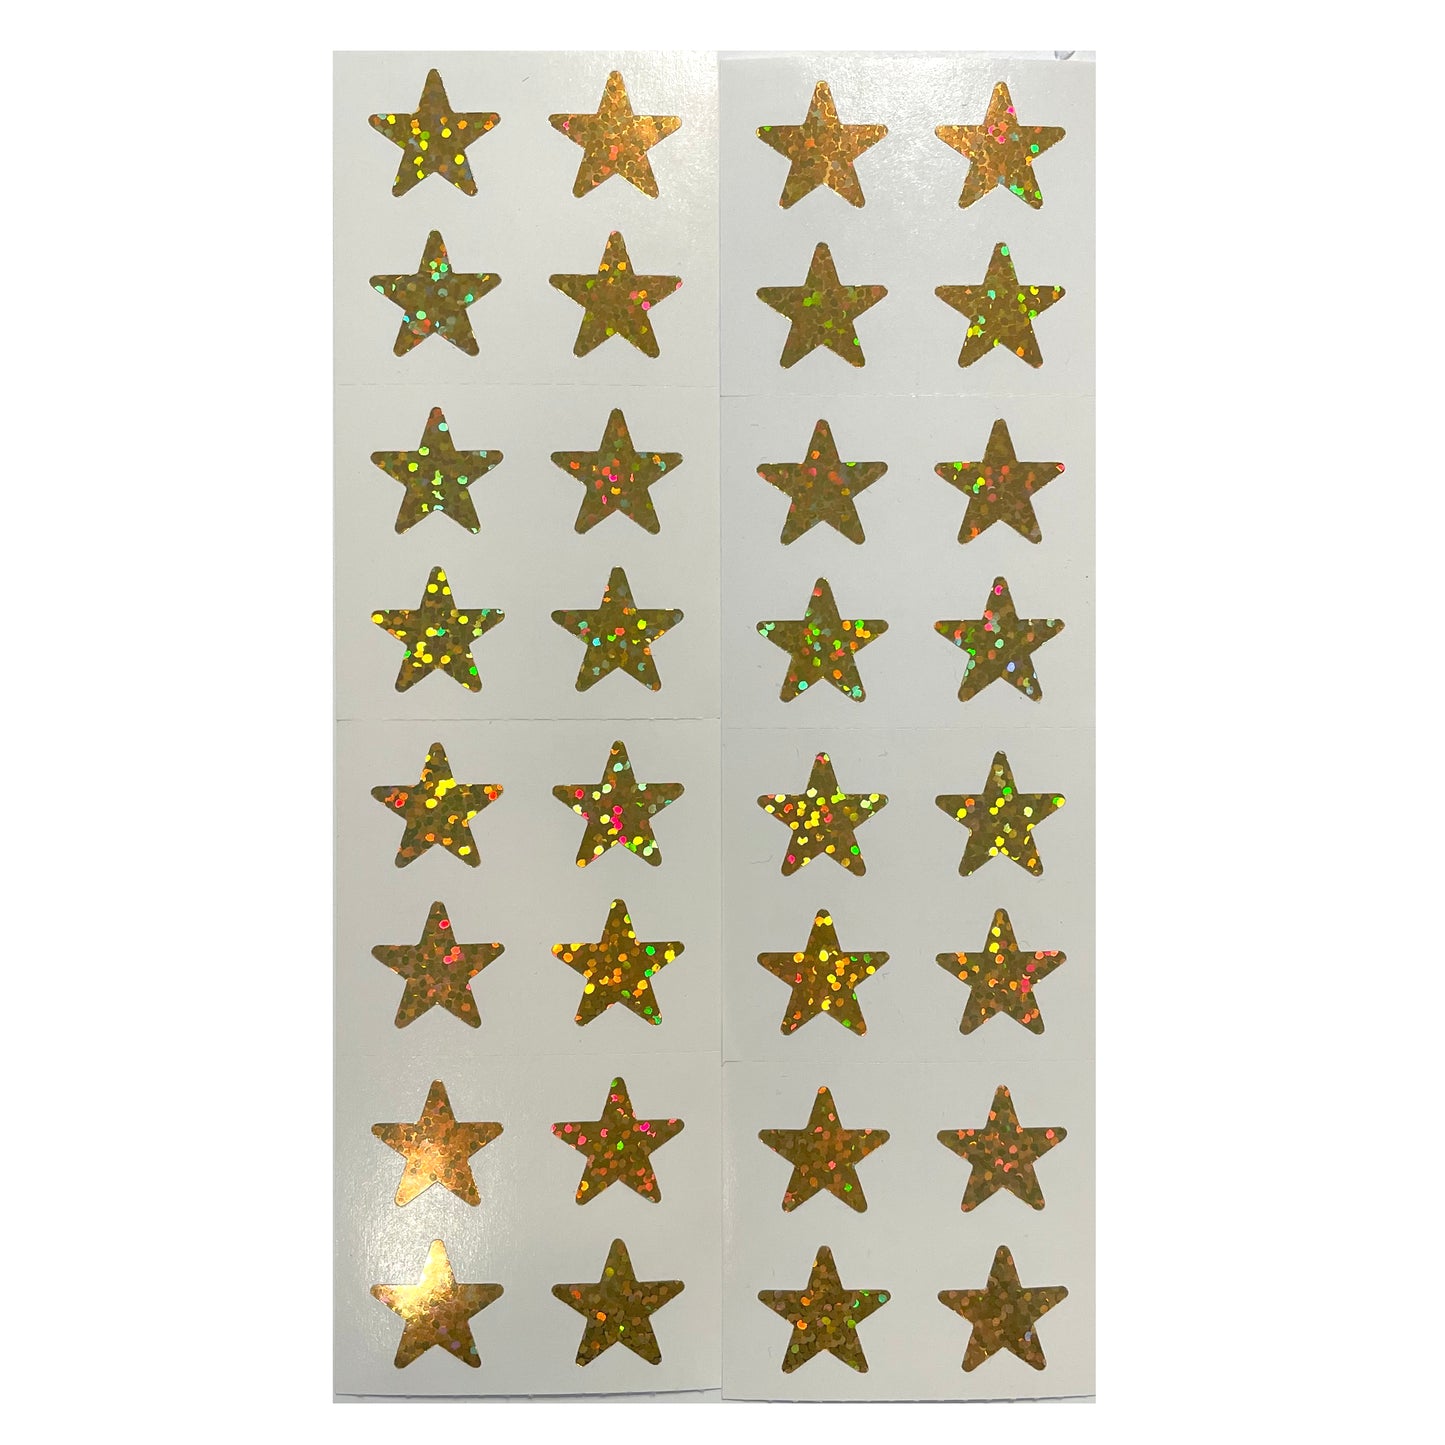 HAMBLY: Gold Star glitter stickers